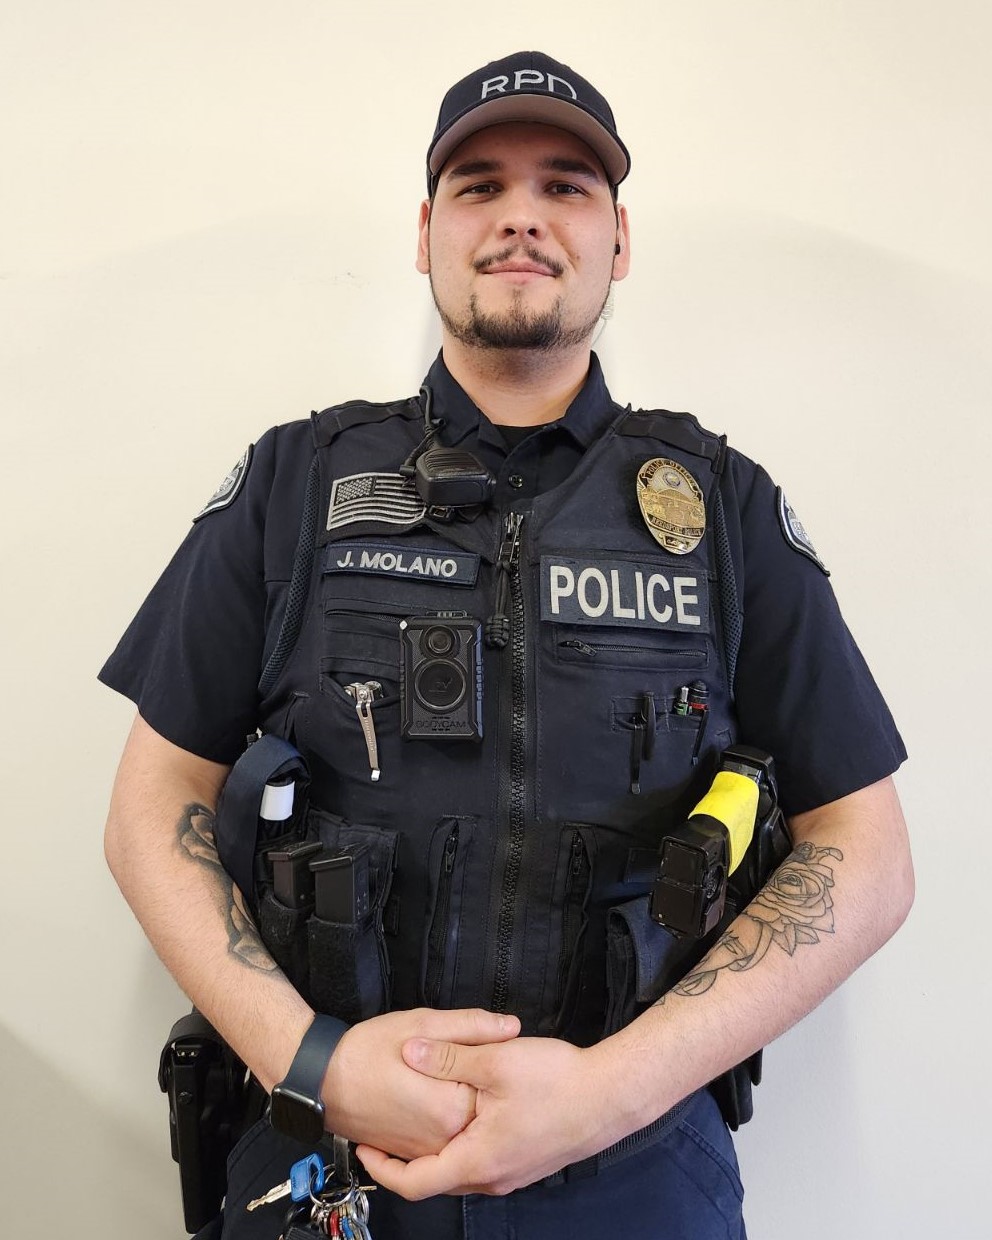 Officer Molano